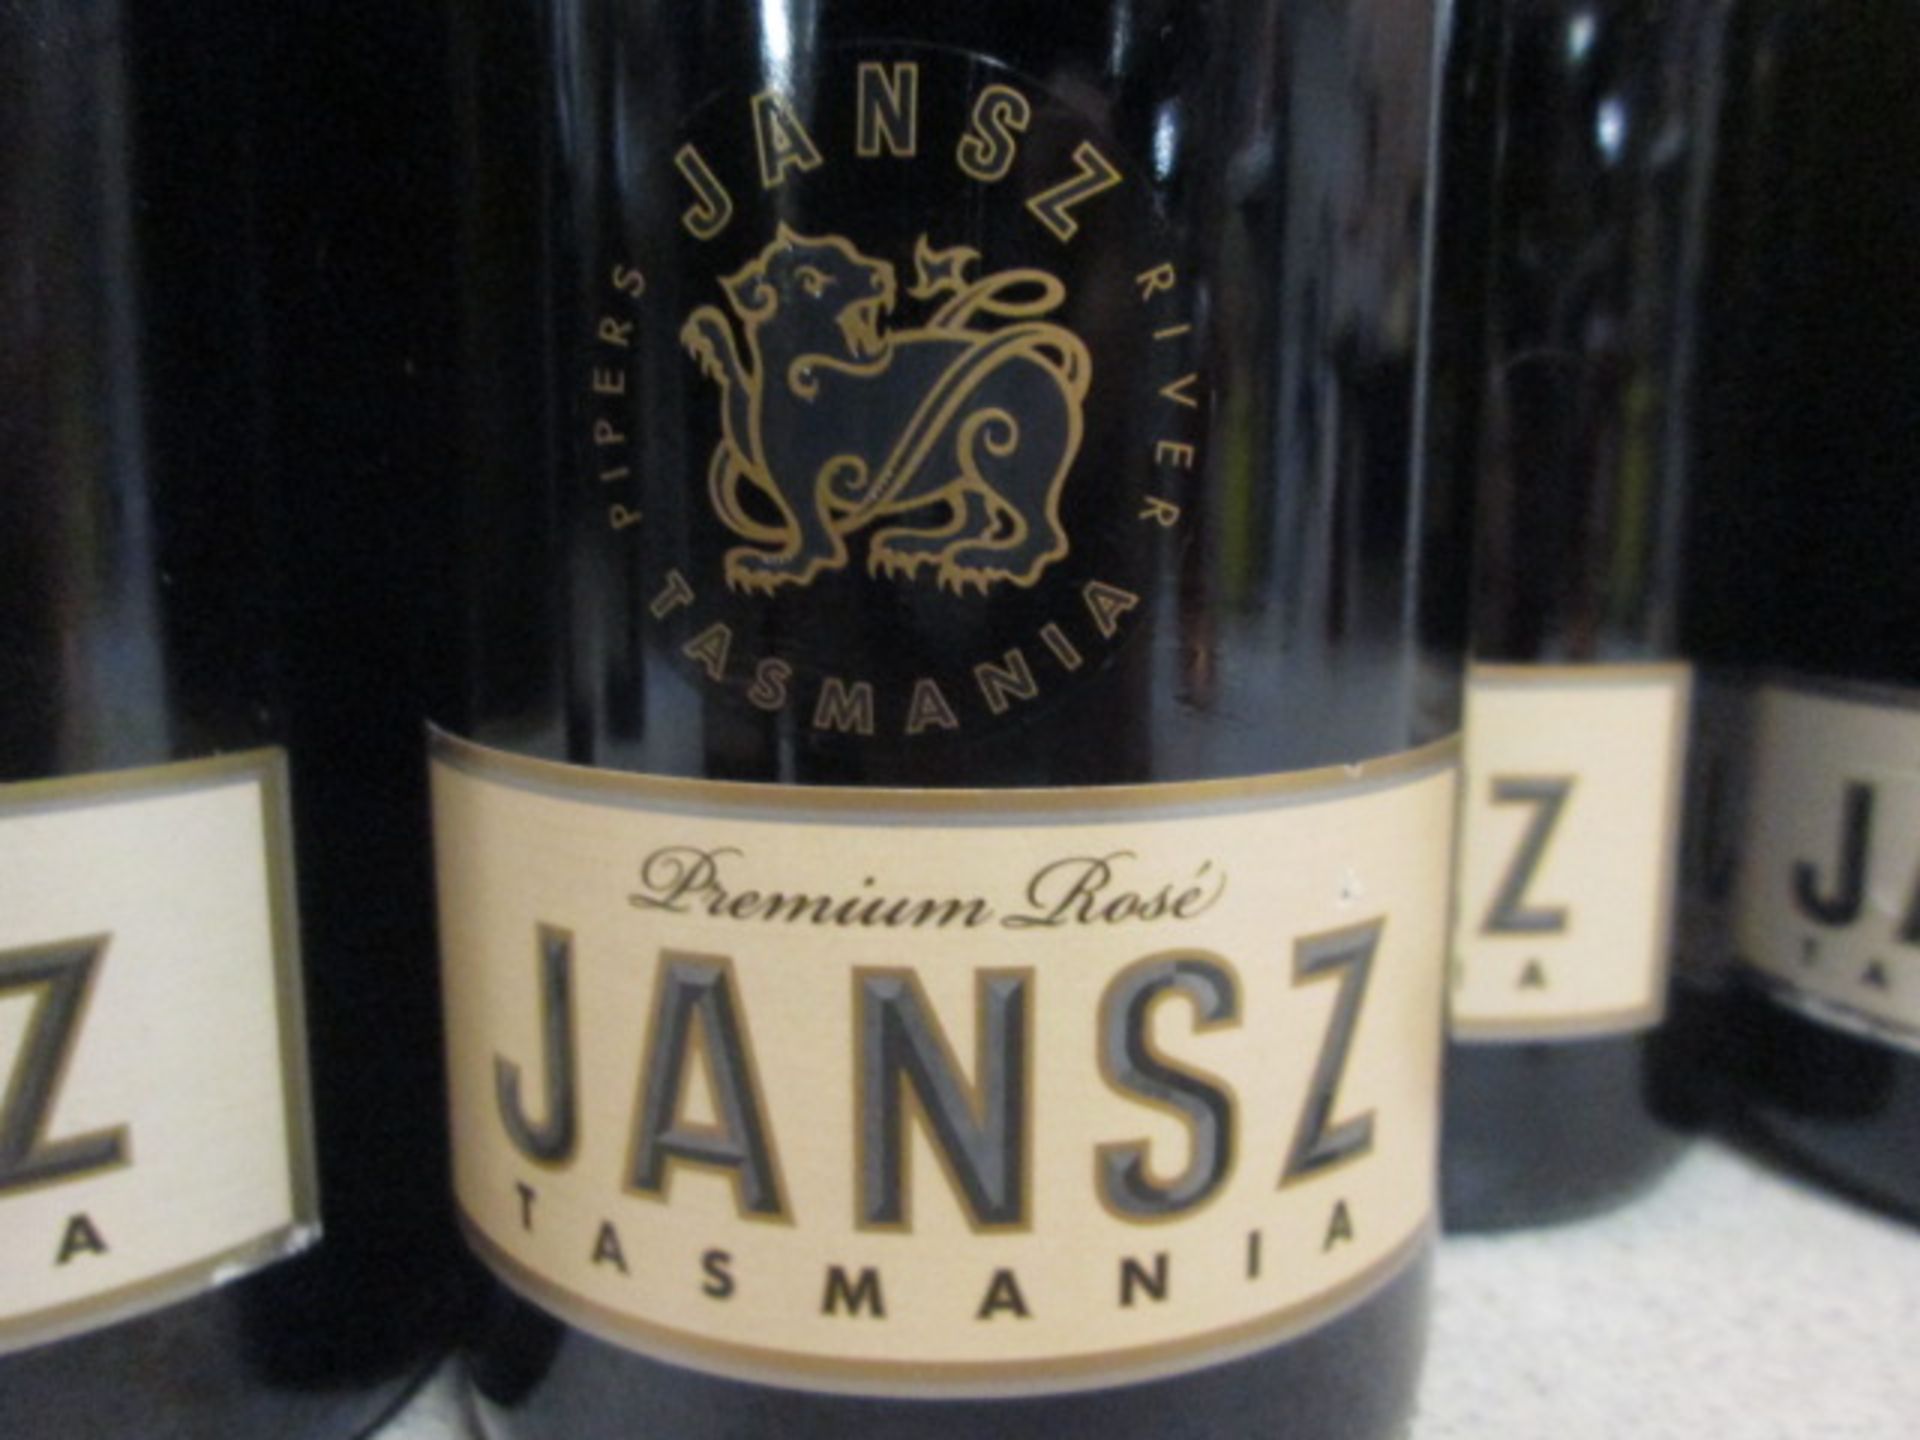 17 x Bottles of Jansz Tasmania (7 Premium Rose, 10 Cuvee) - Image 3 of 3